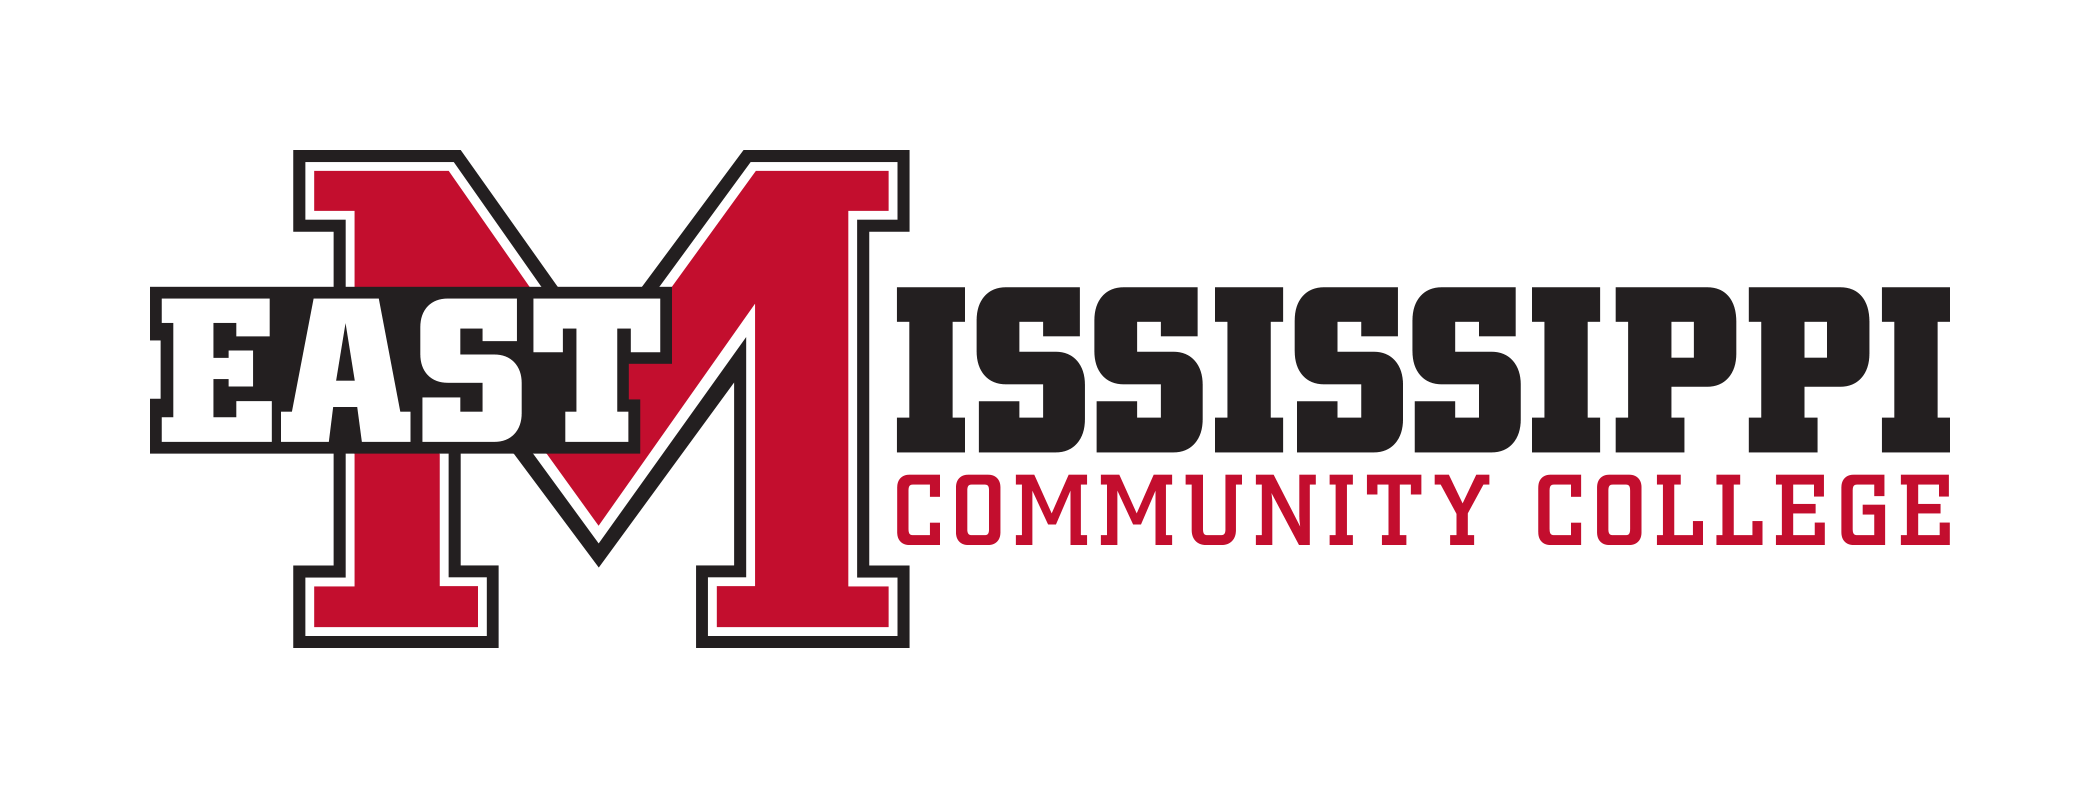 EMCC Scooba Football Logo - East Mississippi Community College